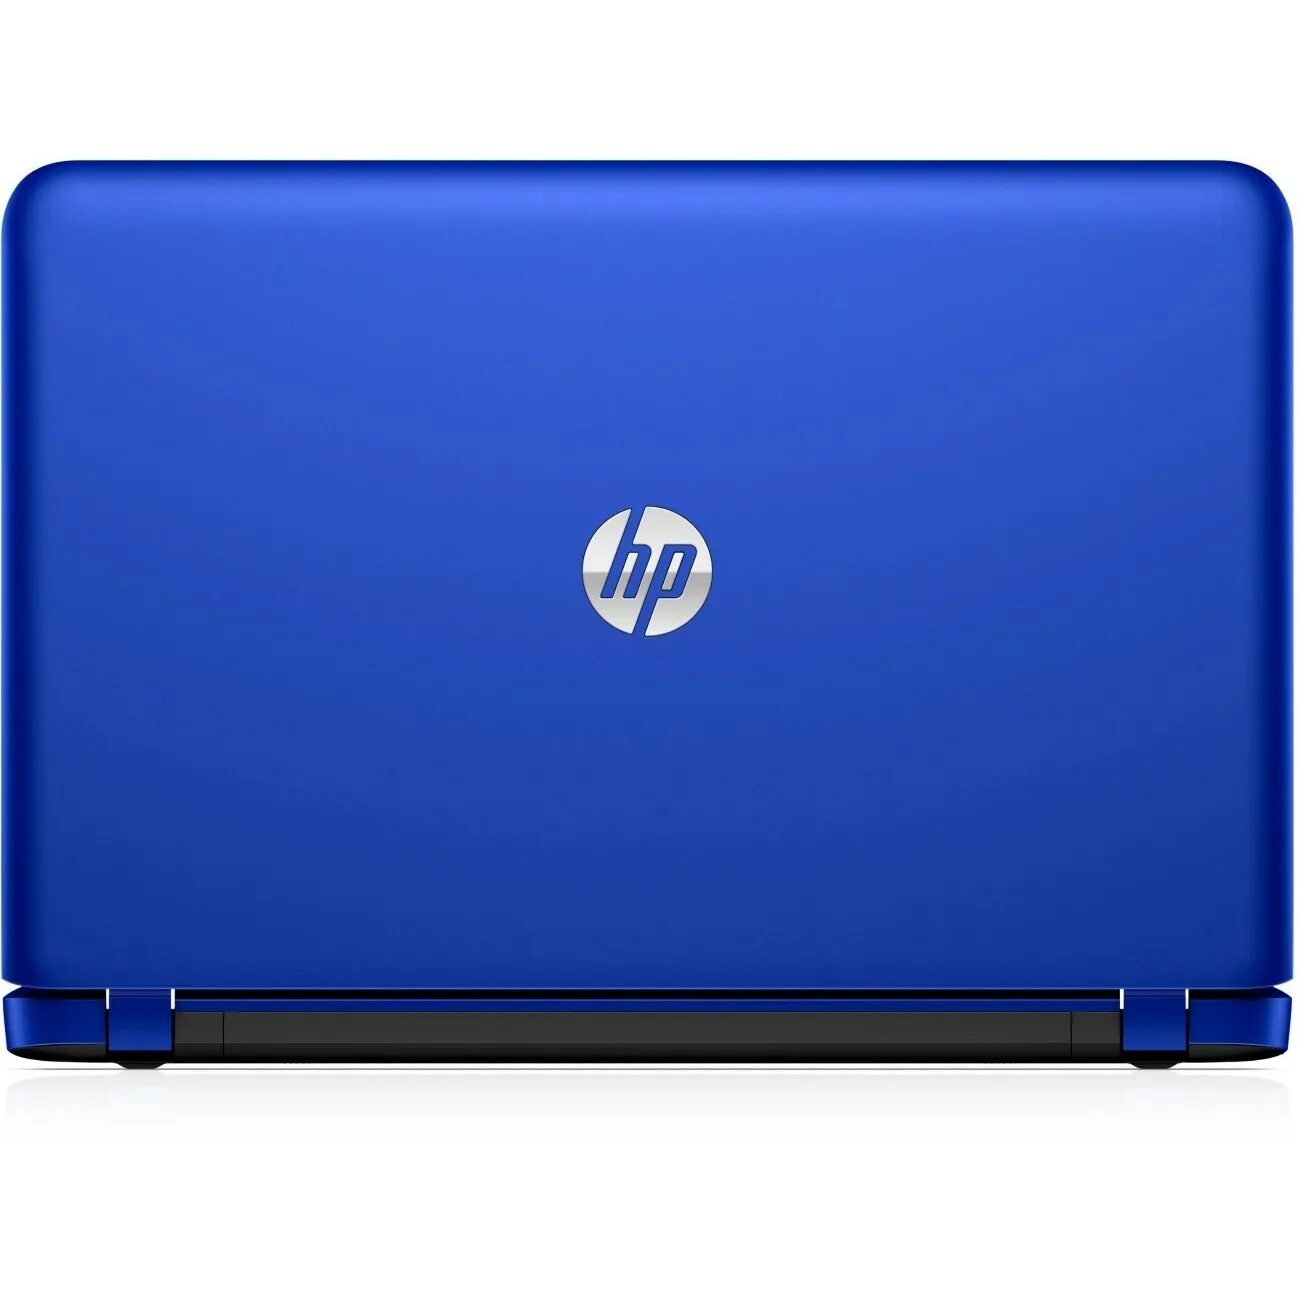 Синий ноутбук. Ноутбук HP Stream 11-d050nr. Ноутбук HP Pavilion 15-aw024ur. Ноутбук HP Pavilion 15-au140ur. Ноутбук HP Stream 13-c050ur.